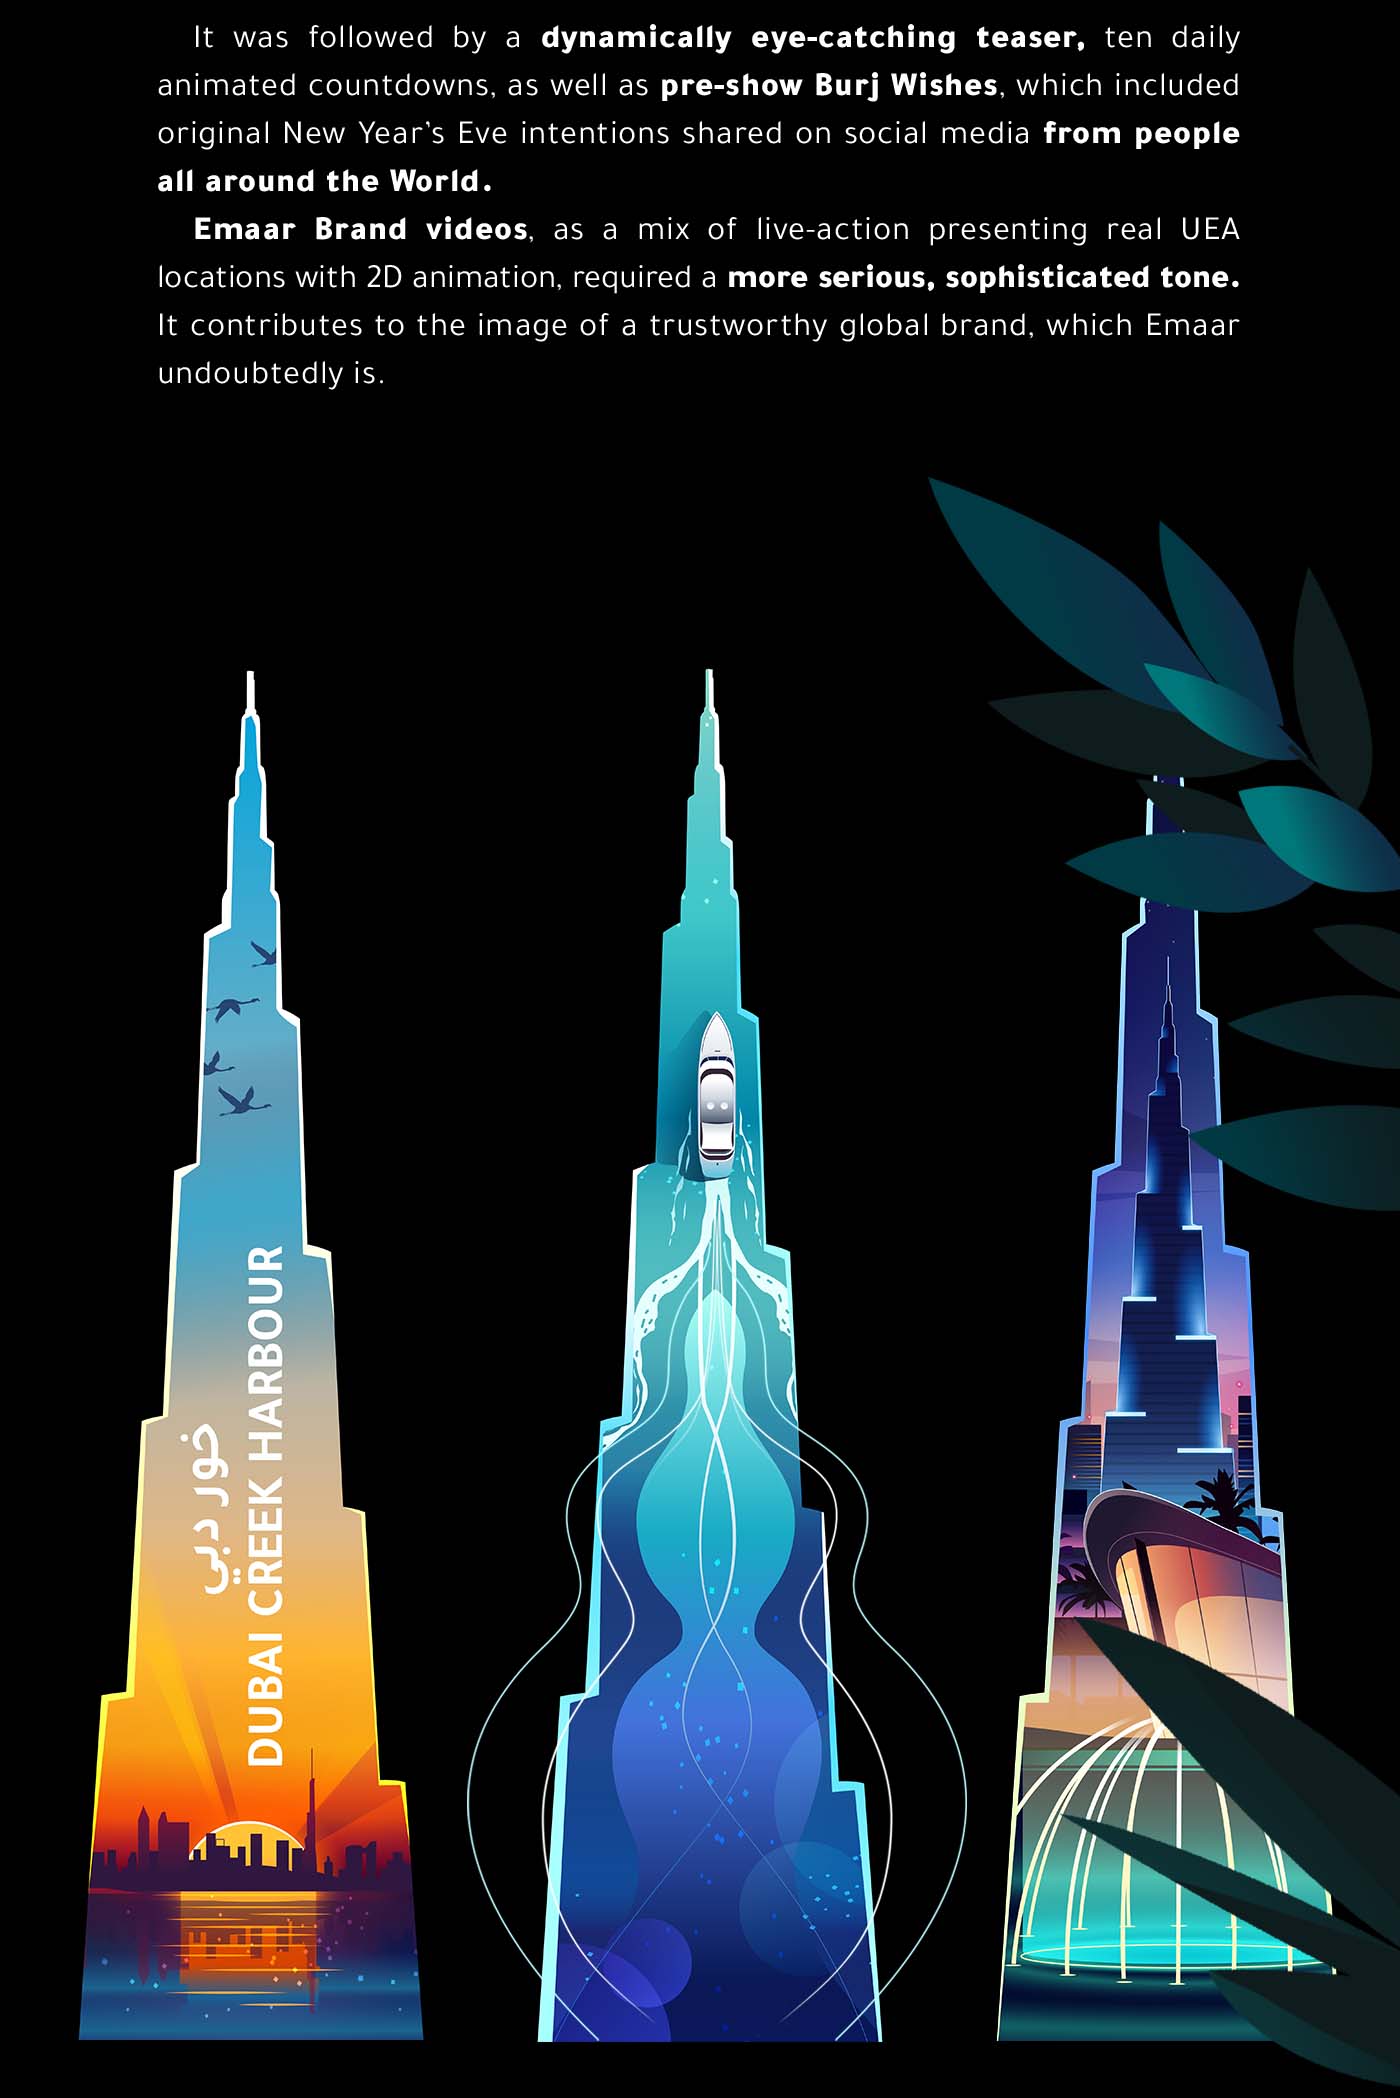 Burj Khalifa - Emaar brand videos